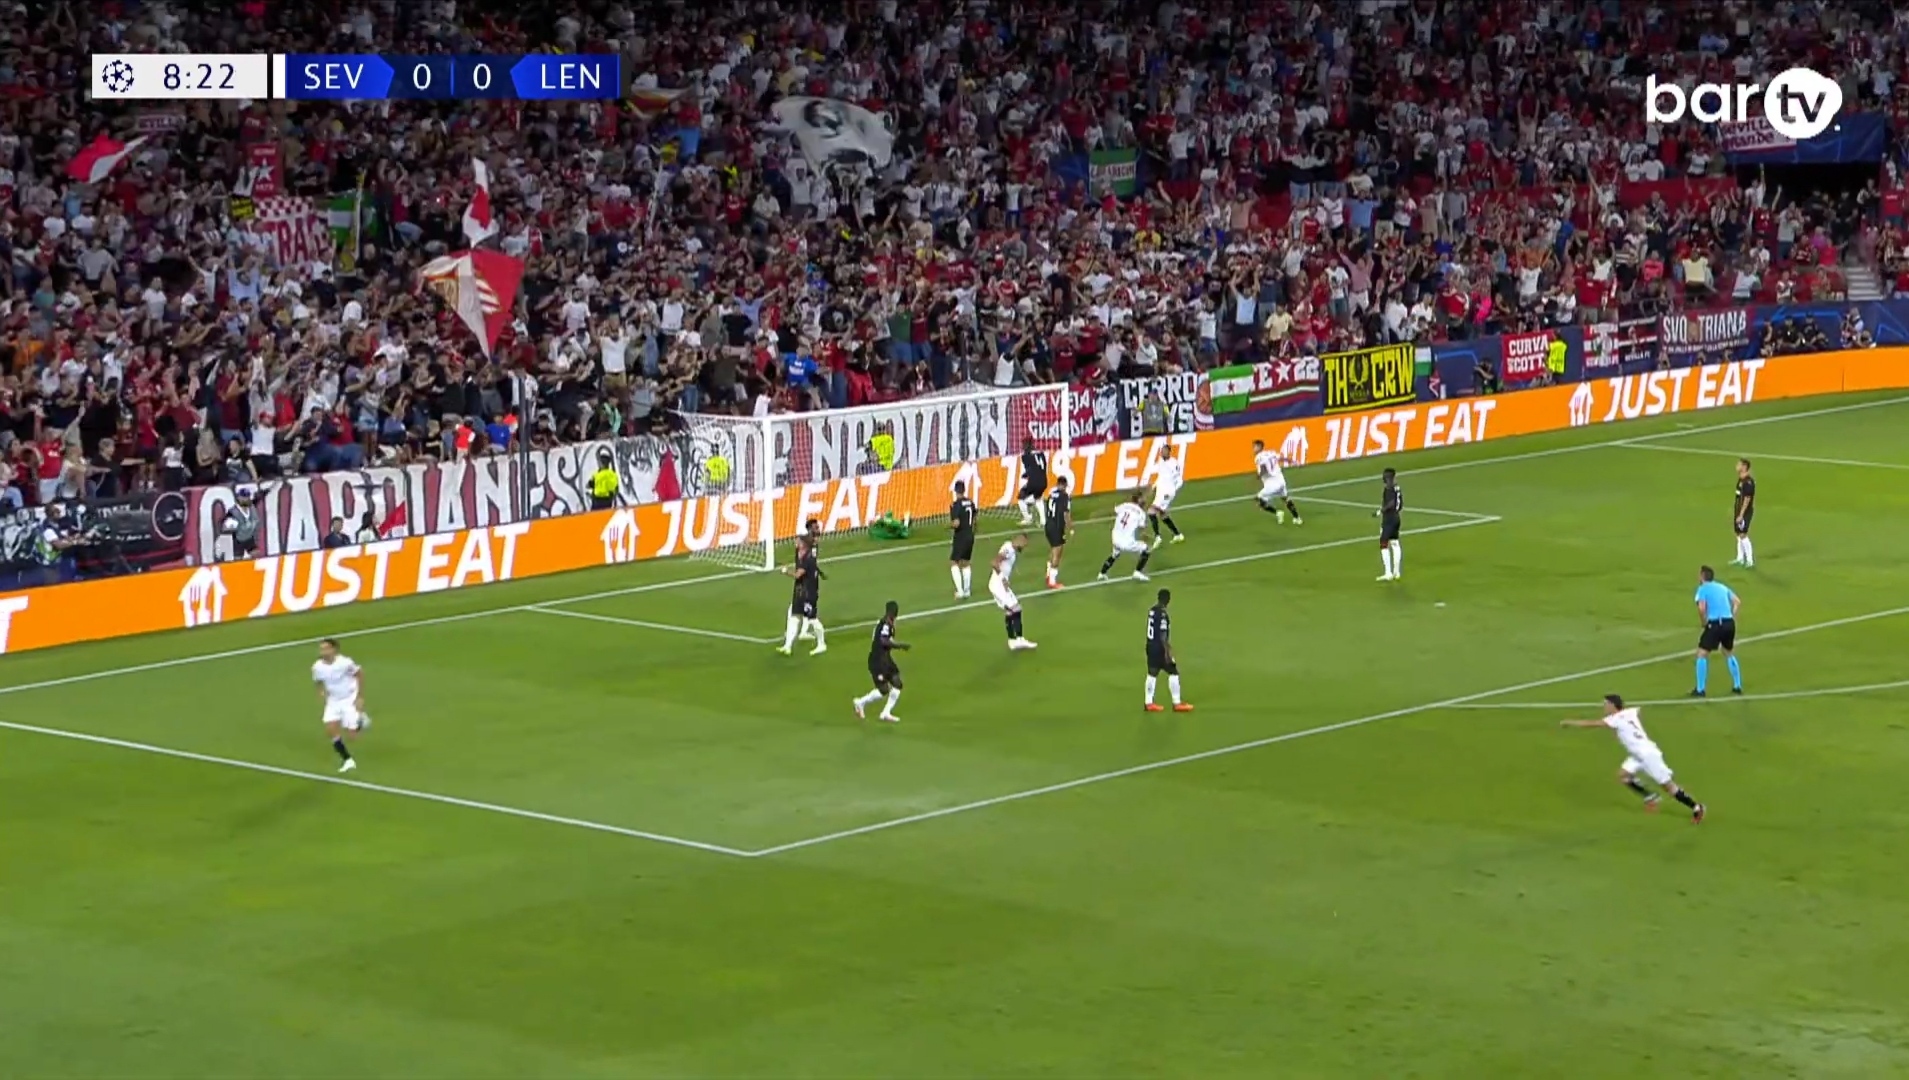 (Vídeo) Resumen del empate del Sevilla FC en Champions League